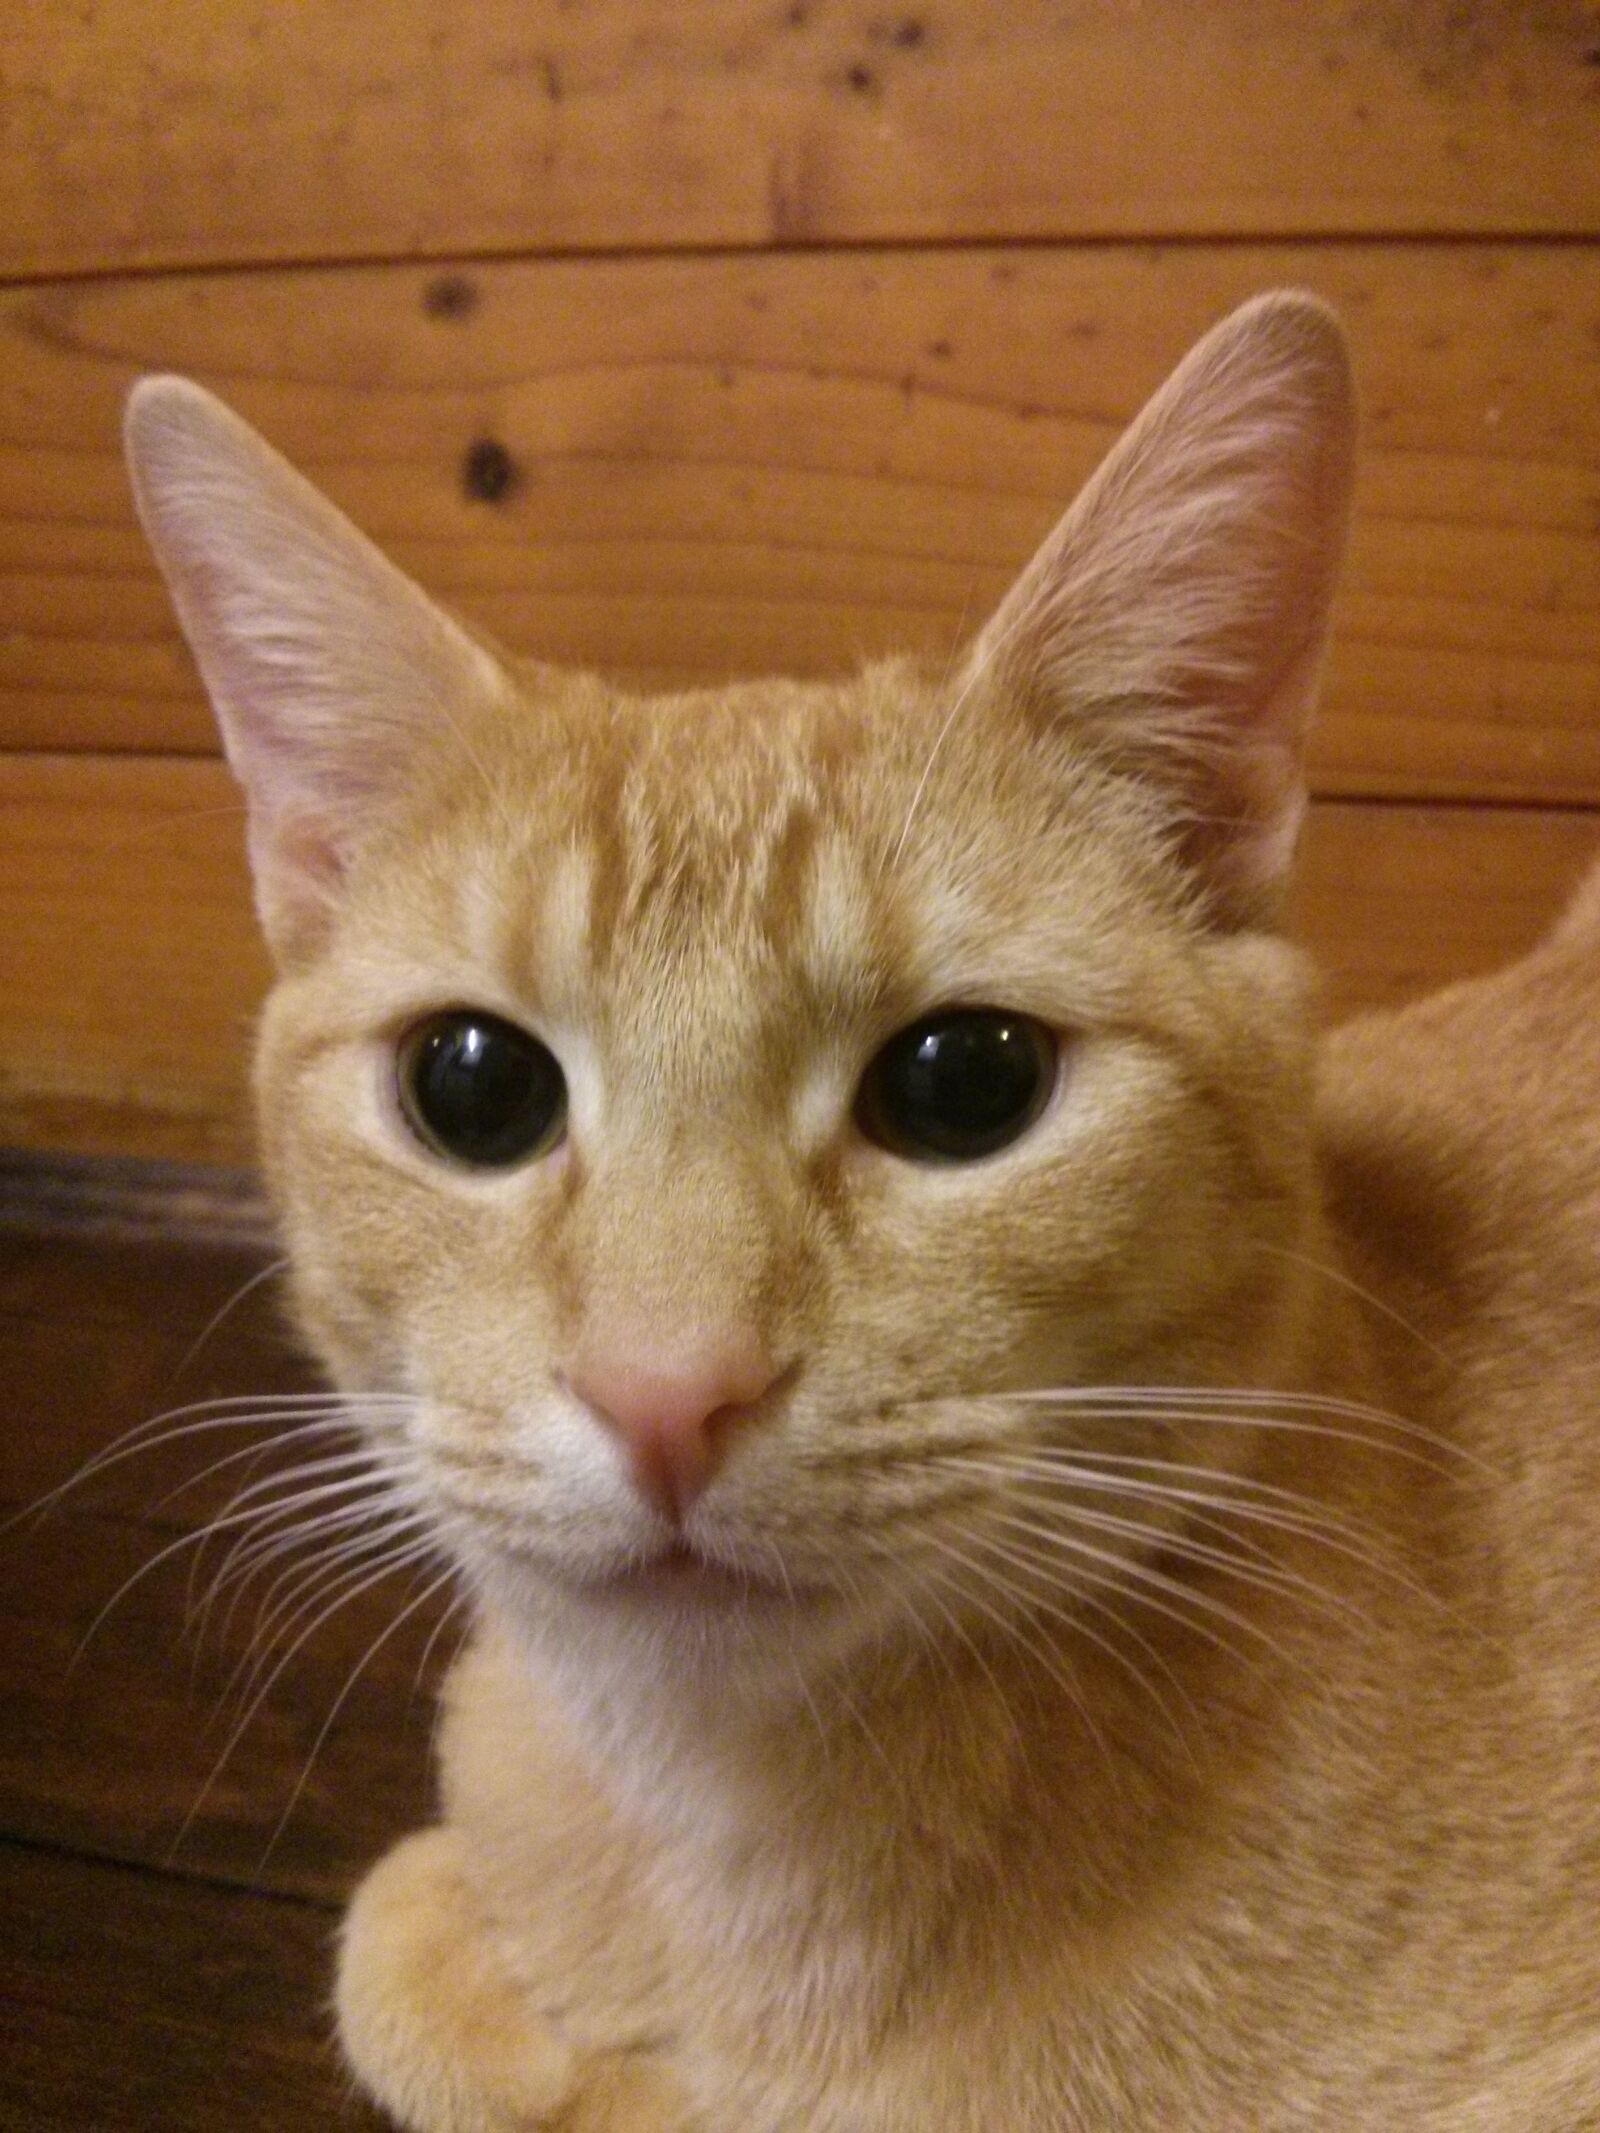 LG Nexus 4 sample photo. Cat, whiskers, eyes photography